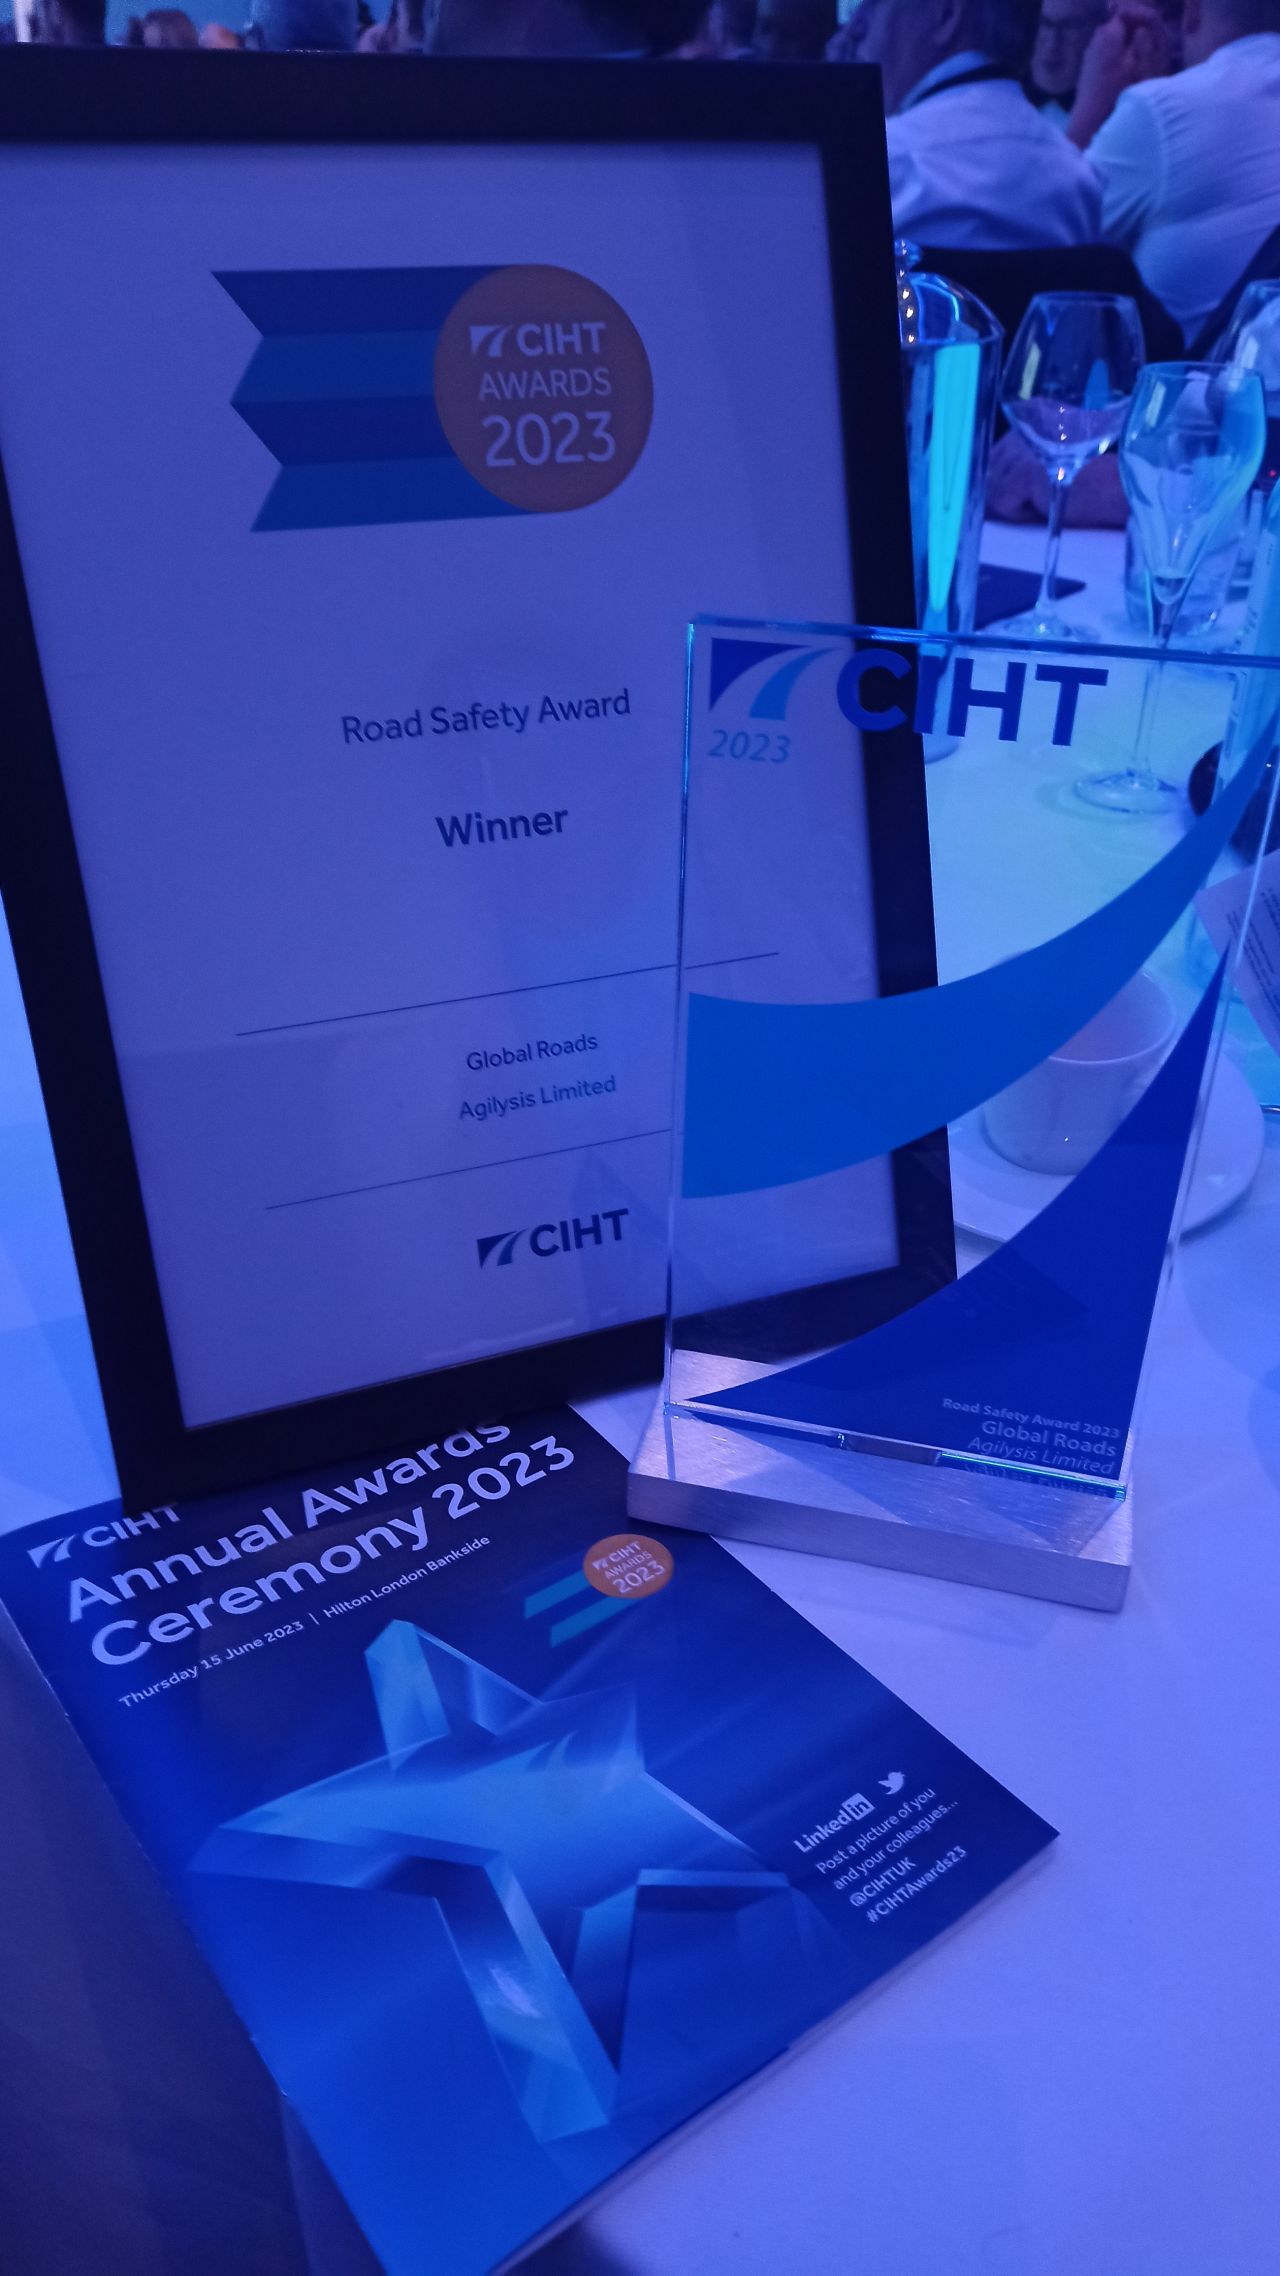 Agilysis takes home CIHT award for Global Roads